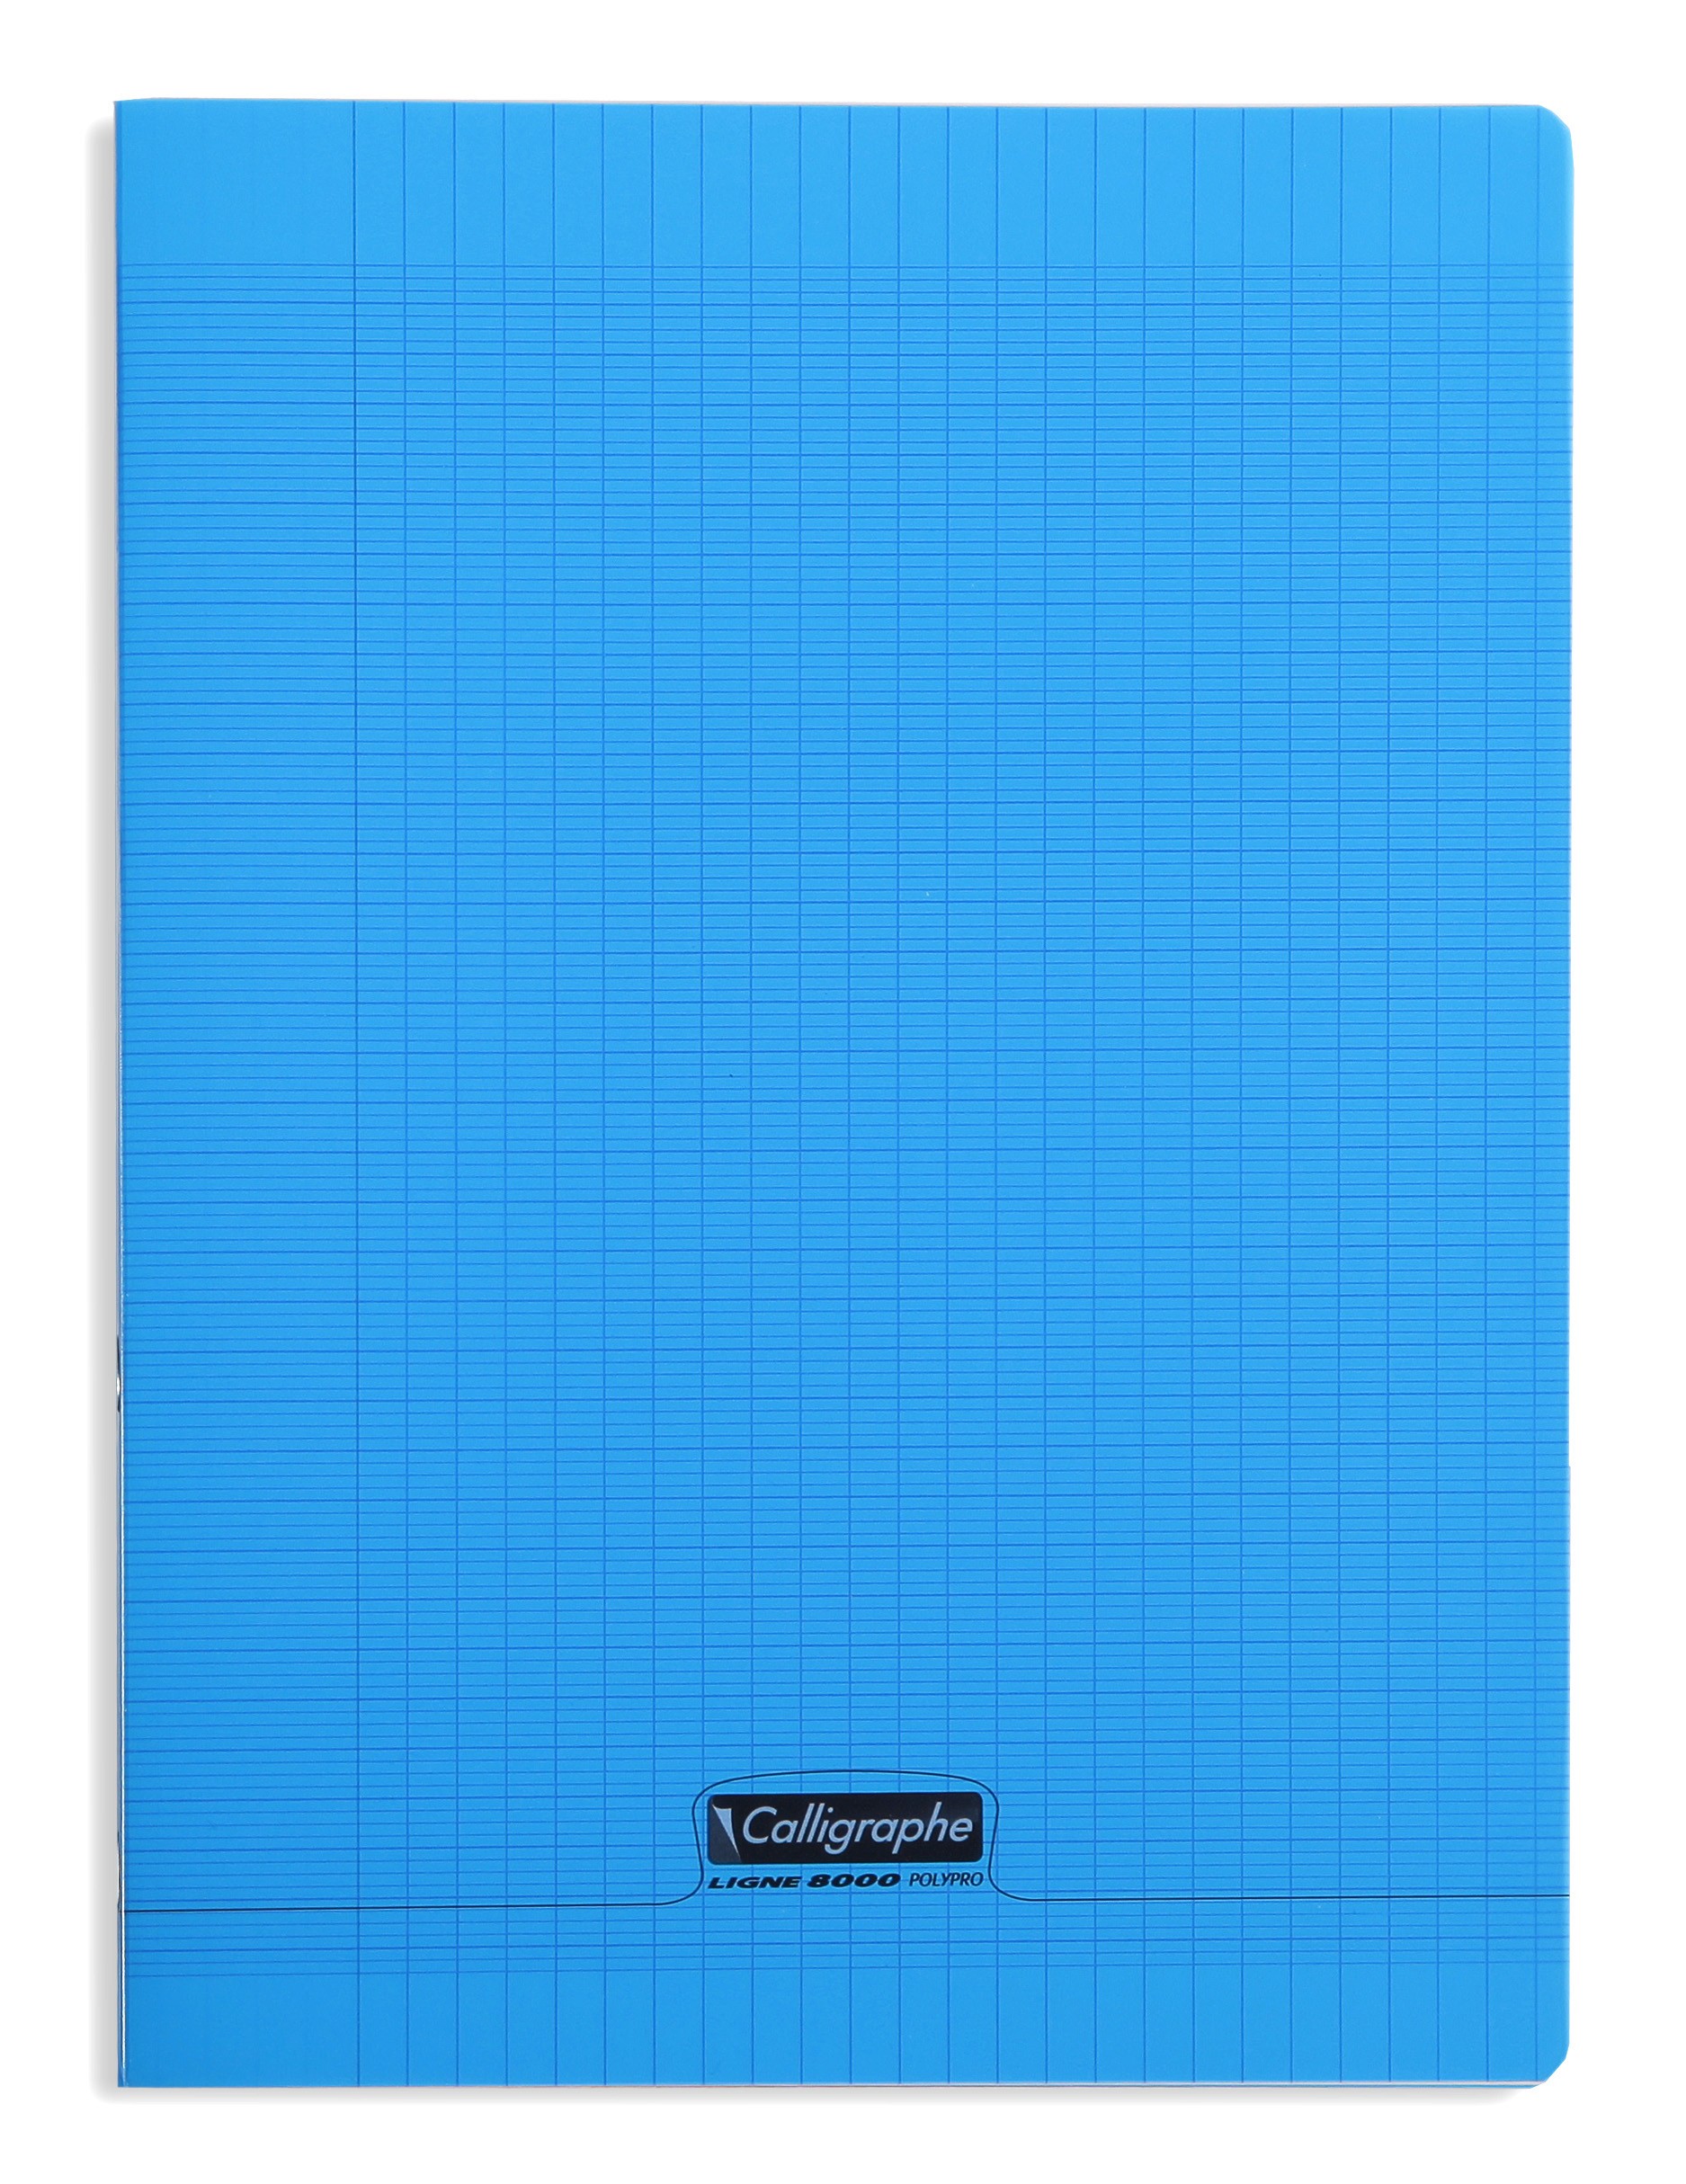 Cahier polypro Calligraphe grand format 24x32 96p petits carreaux (séyès) -  bleu